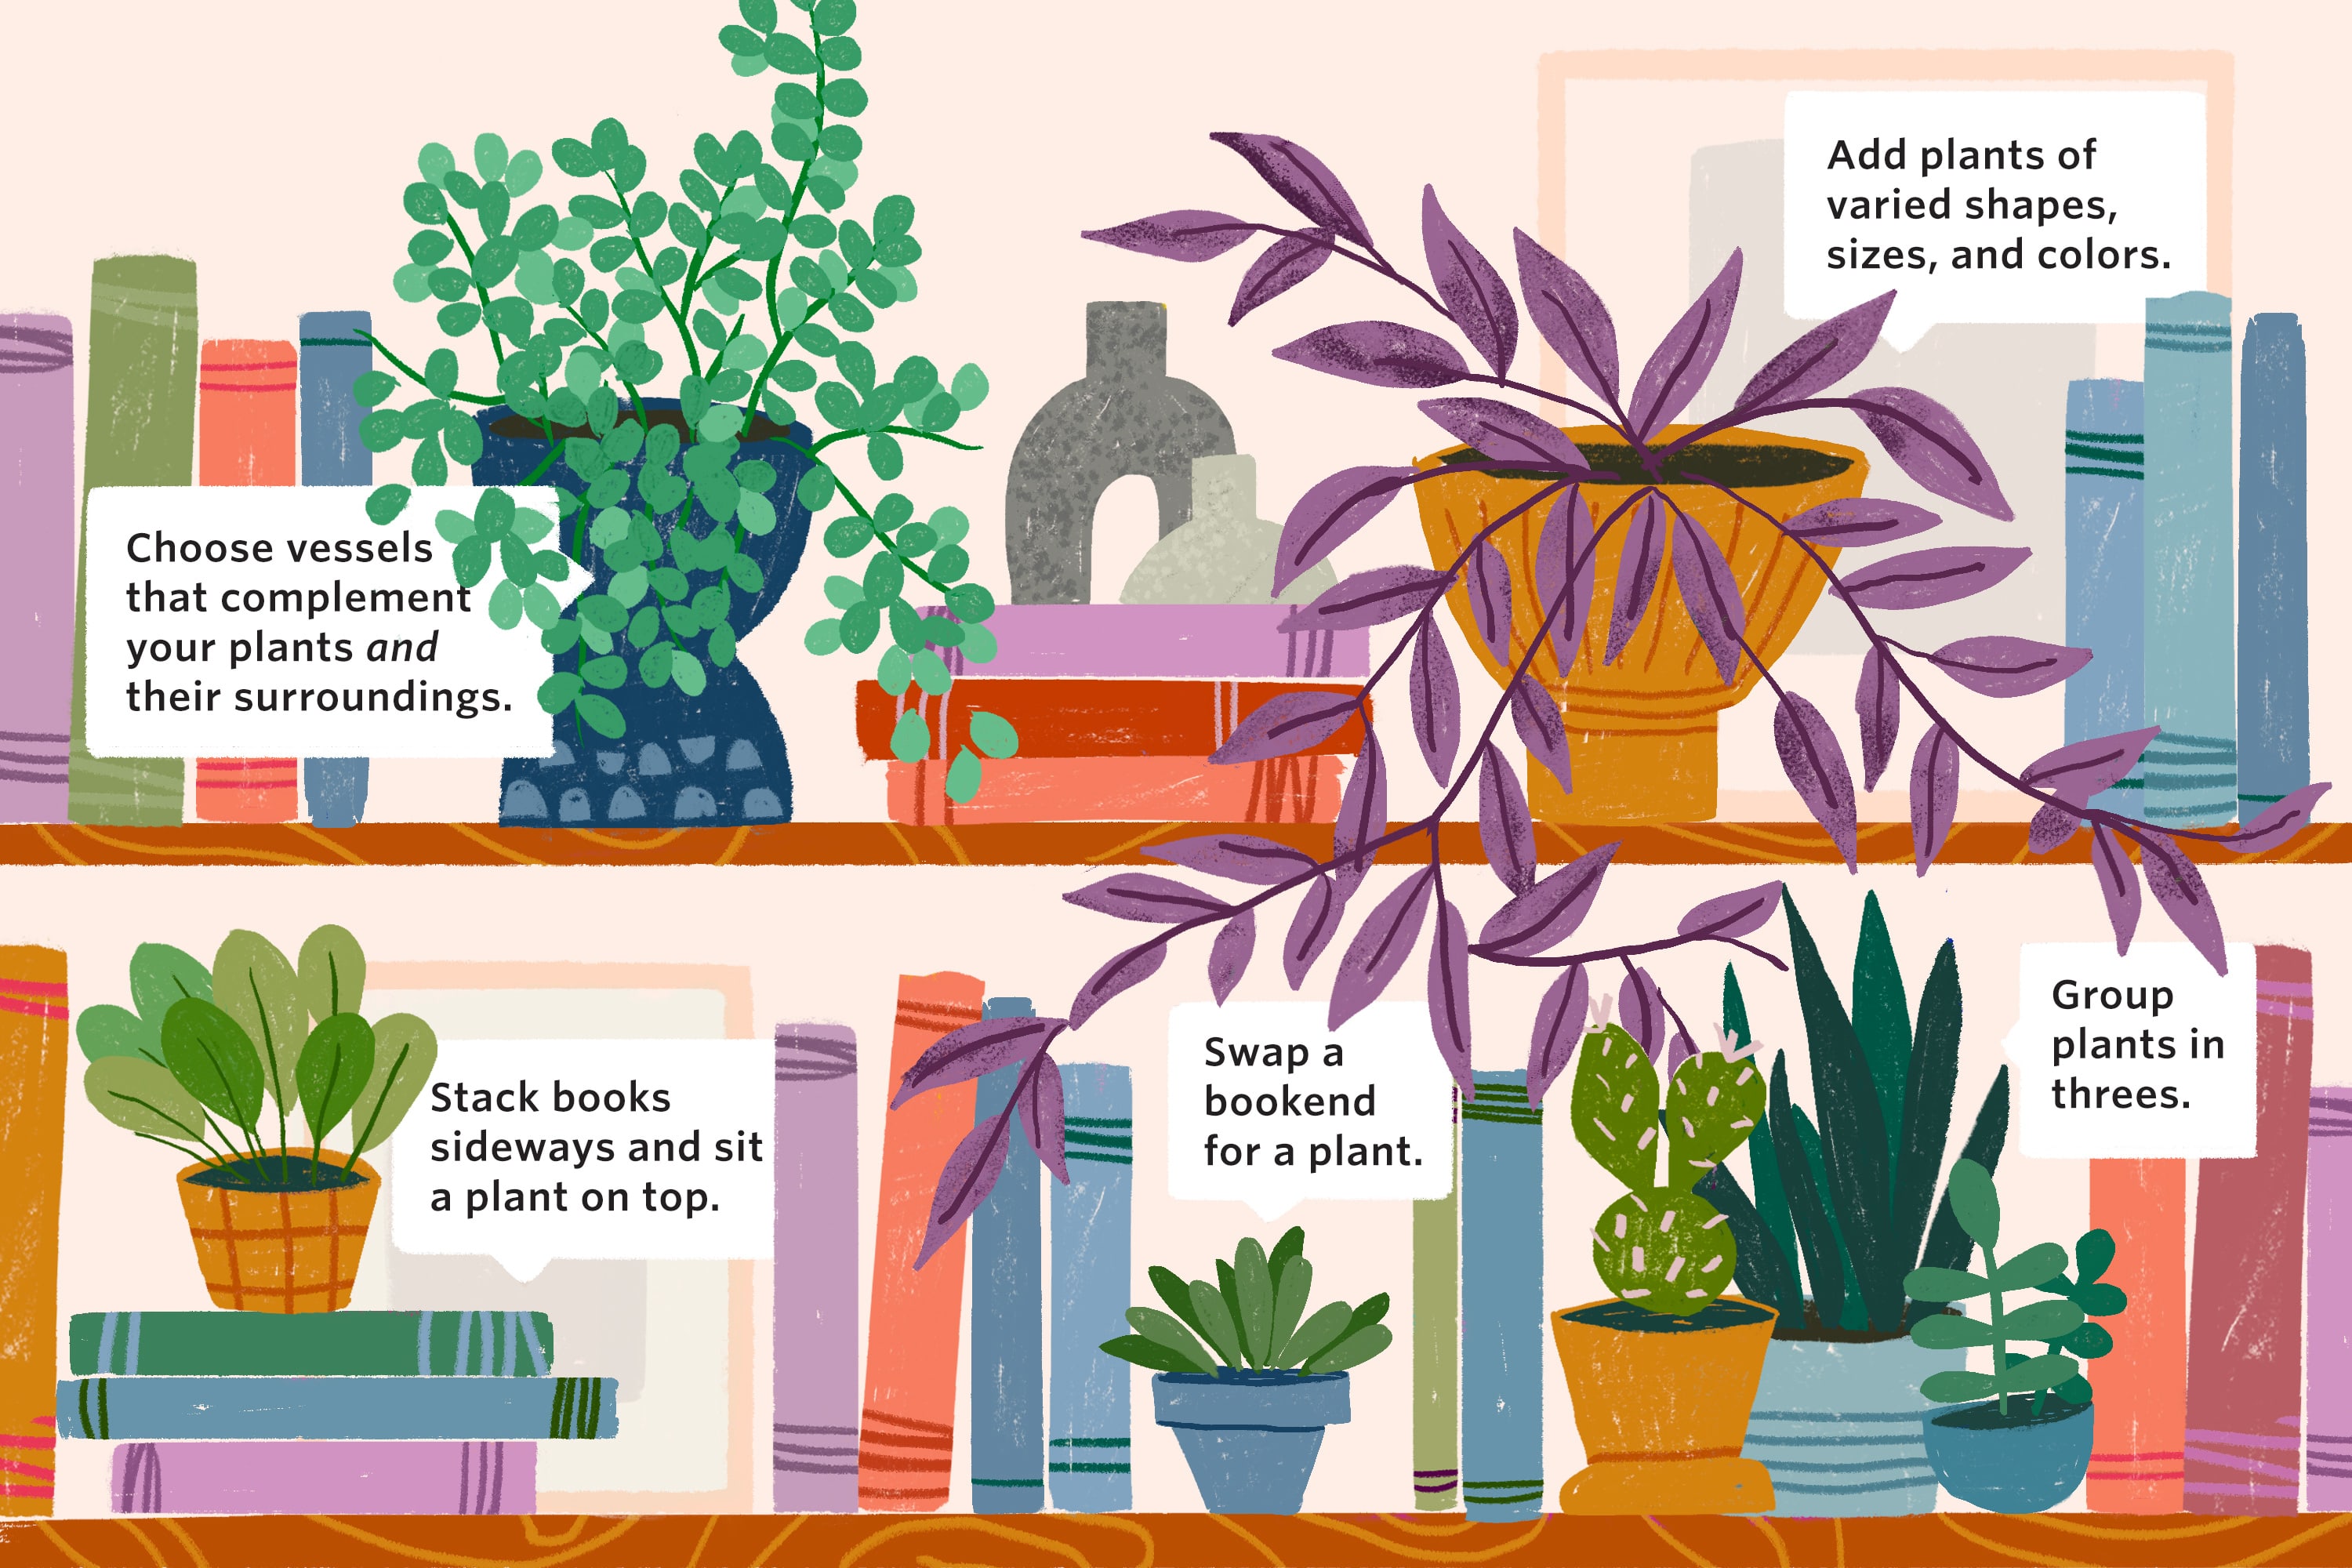 https://cdn.apartmenttherapy.info/image/upload/v1614371751/at/art/design/2021-02/Greendigs-plants/greendigs-plantshelf-illustration-opener.jpg